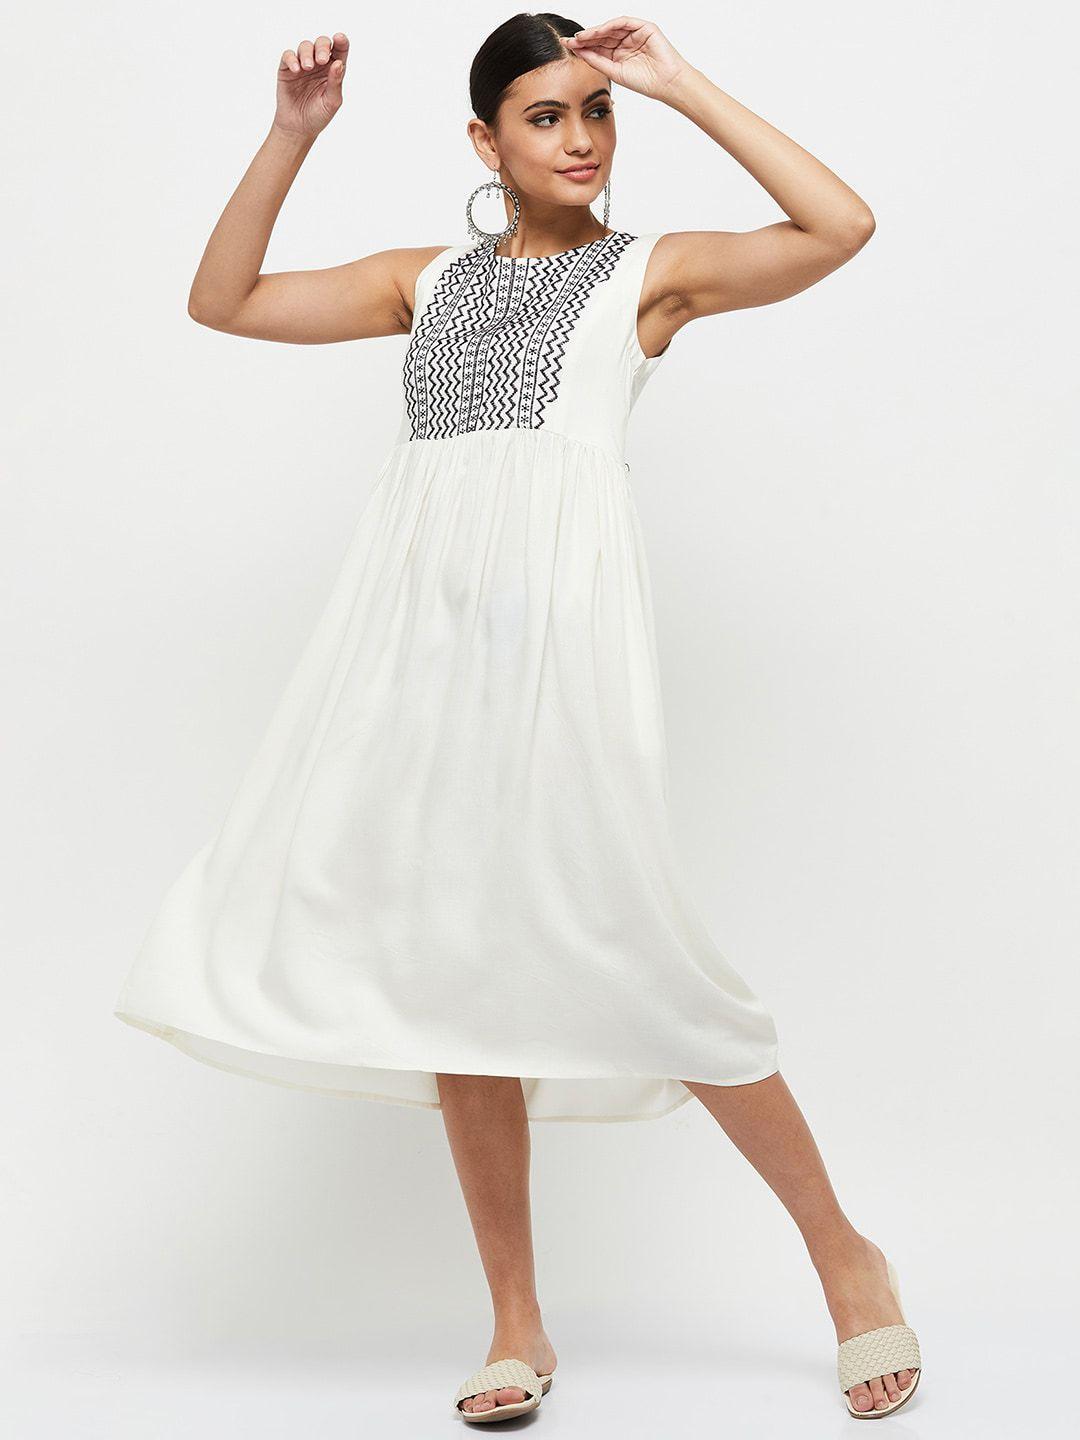 max-white-a-line-dress